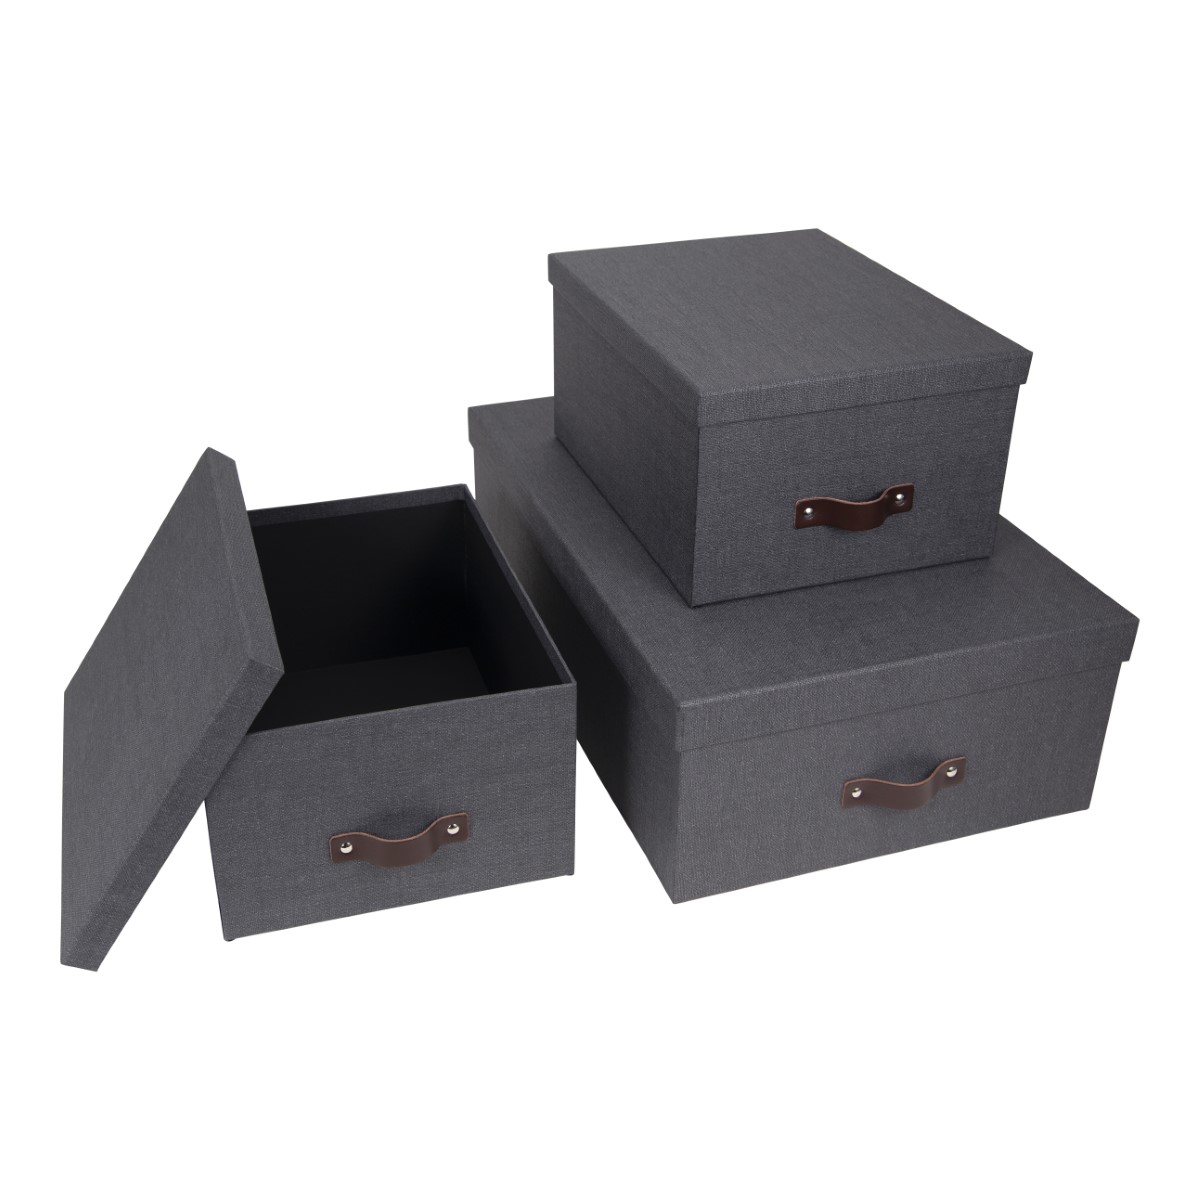 Inge Storage Box set of 3 Black in the group Hobby & Creativity / Organize / Storage at Pen Store (127312)